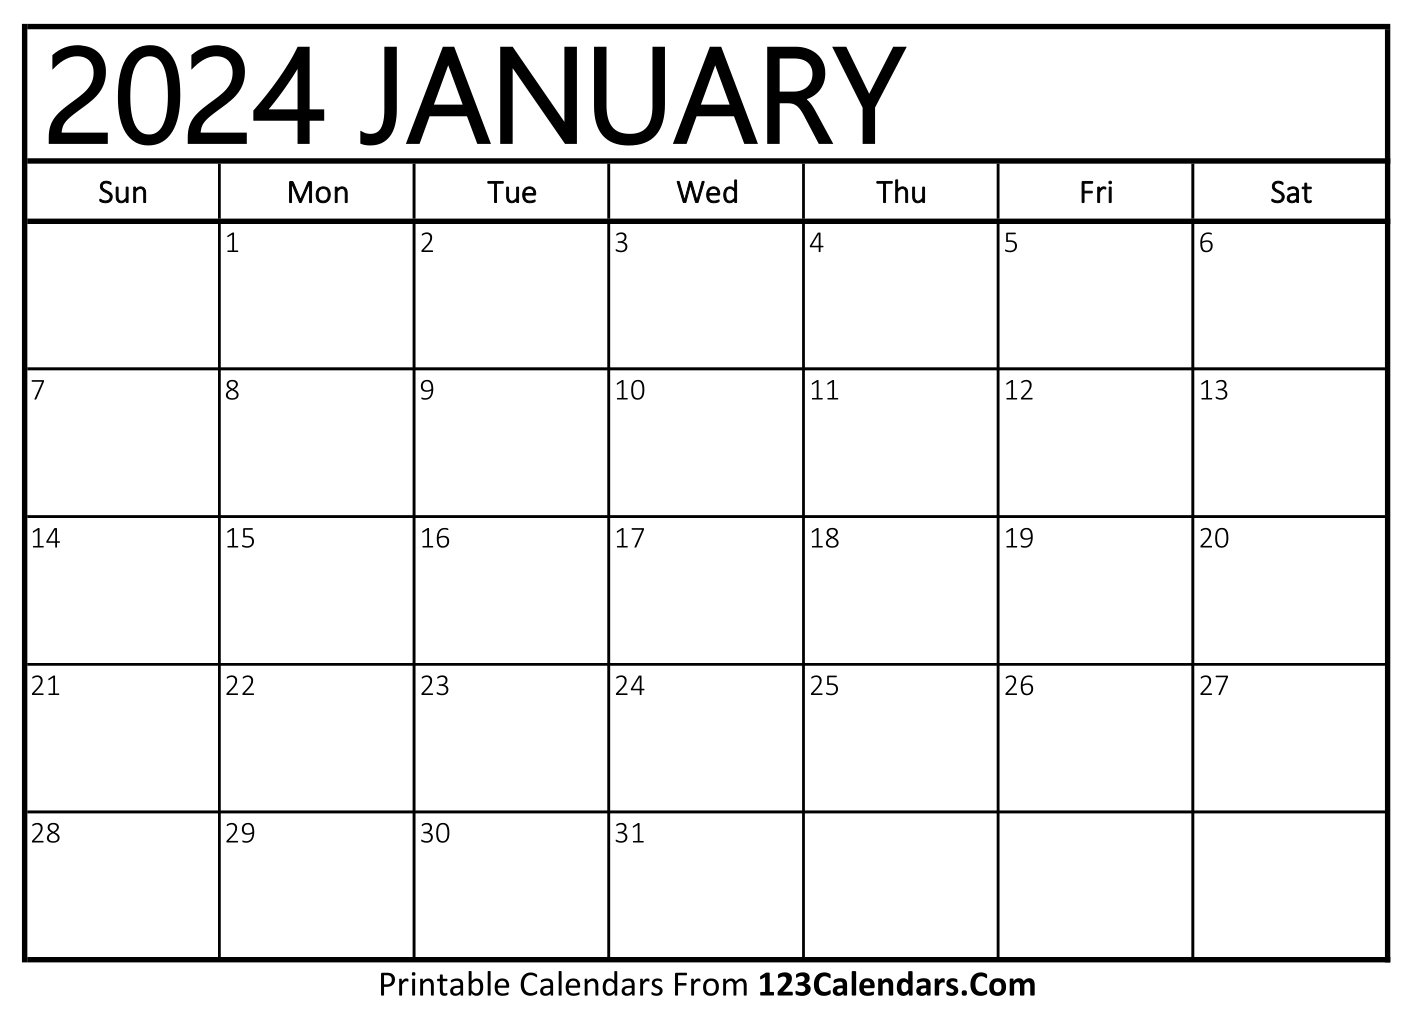 Printable January 2024 Calendar Templates - 123Calendars for January 2024 Calendar Printable Wiki